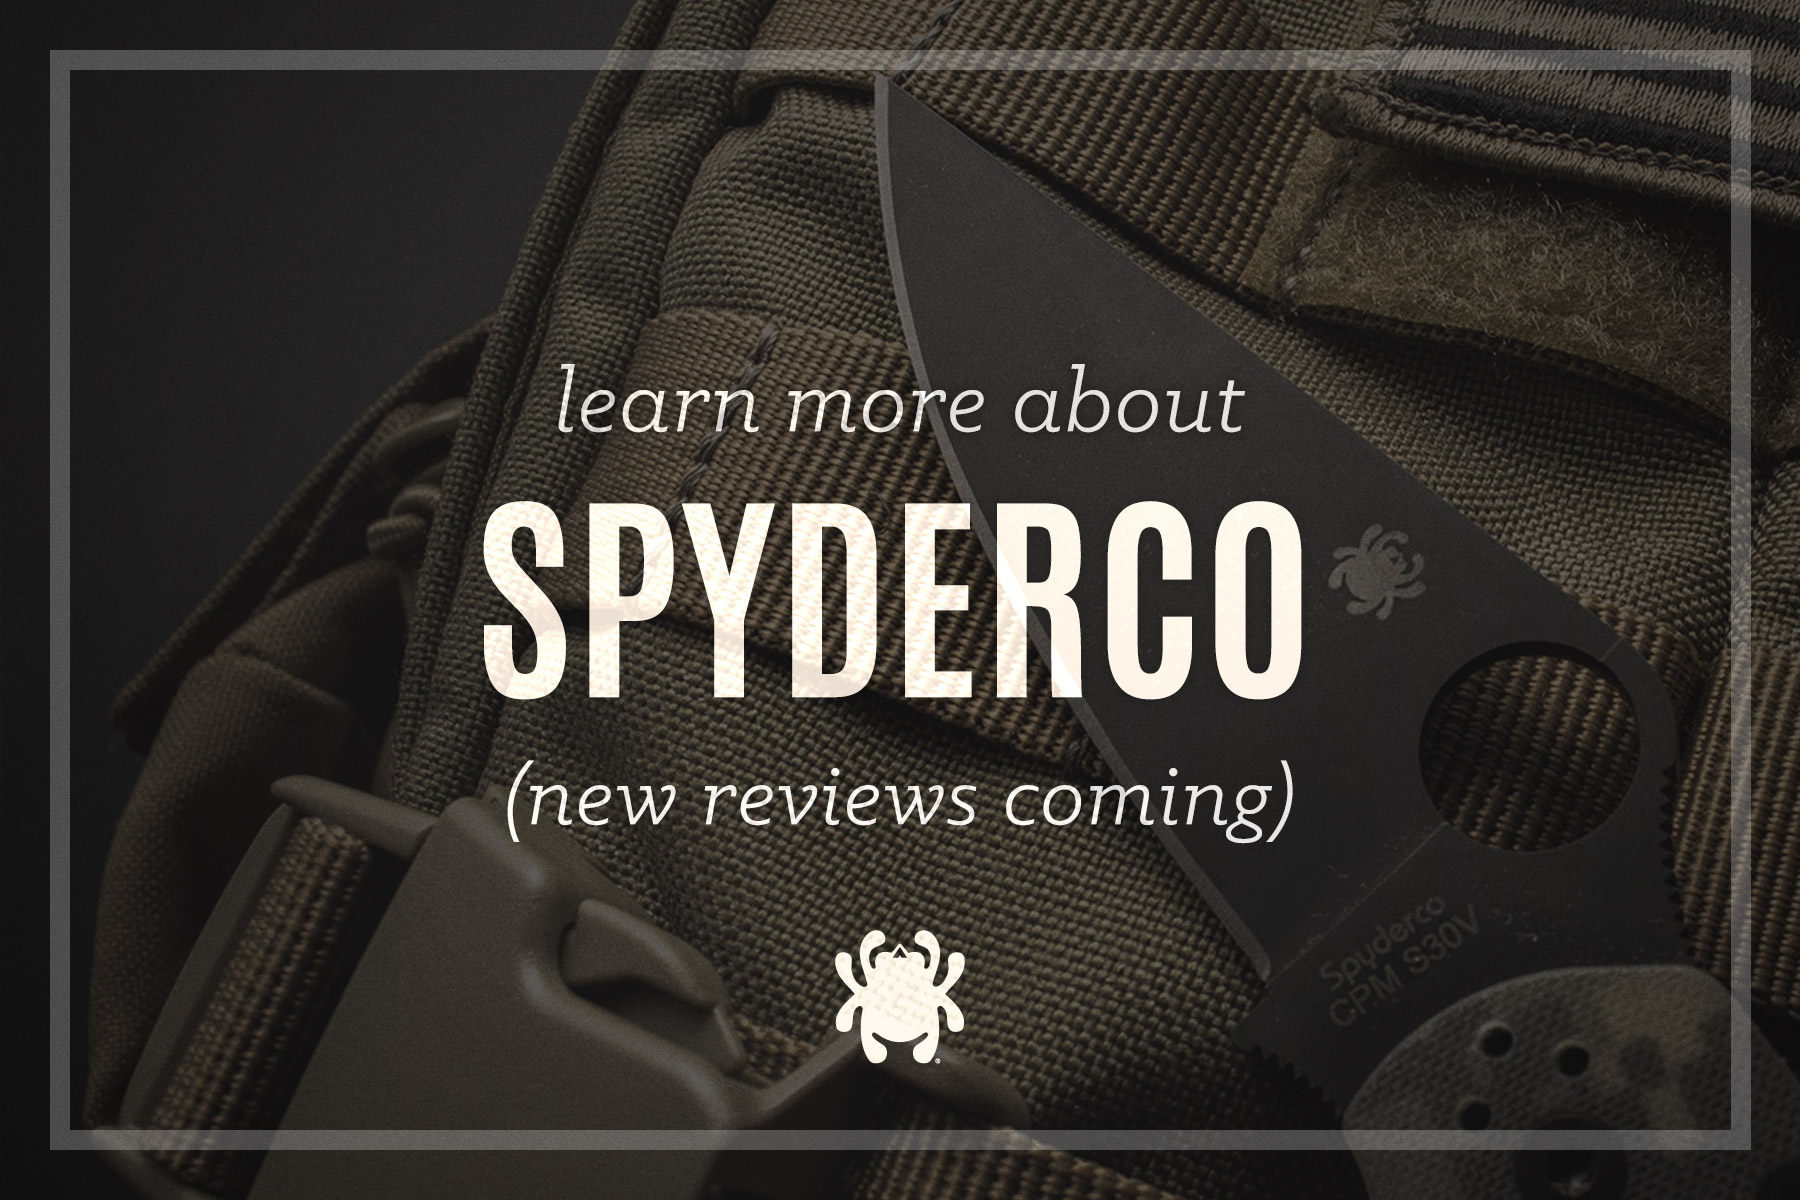 Spyderco Company History (2 new reviews coming soon)